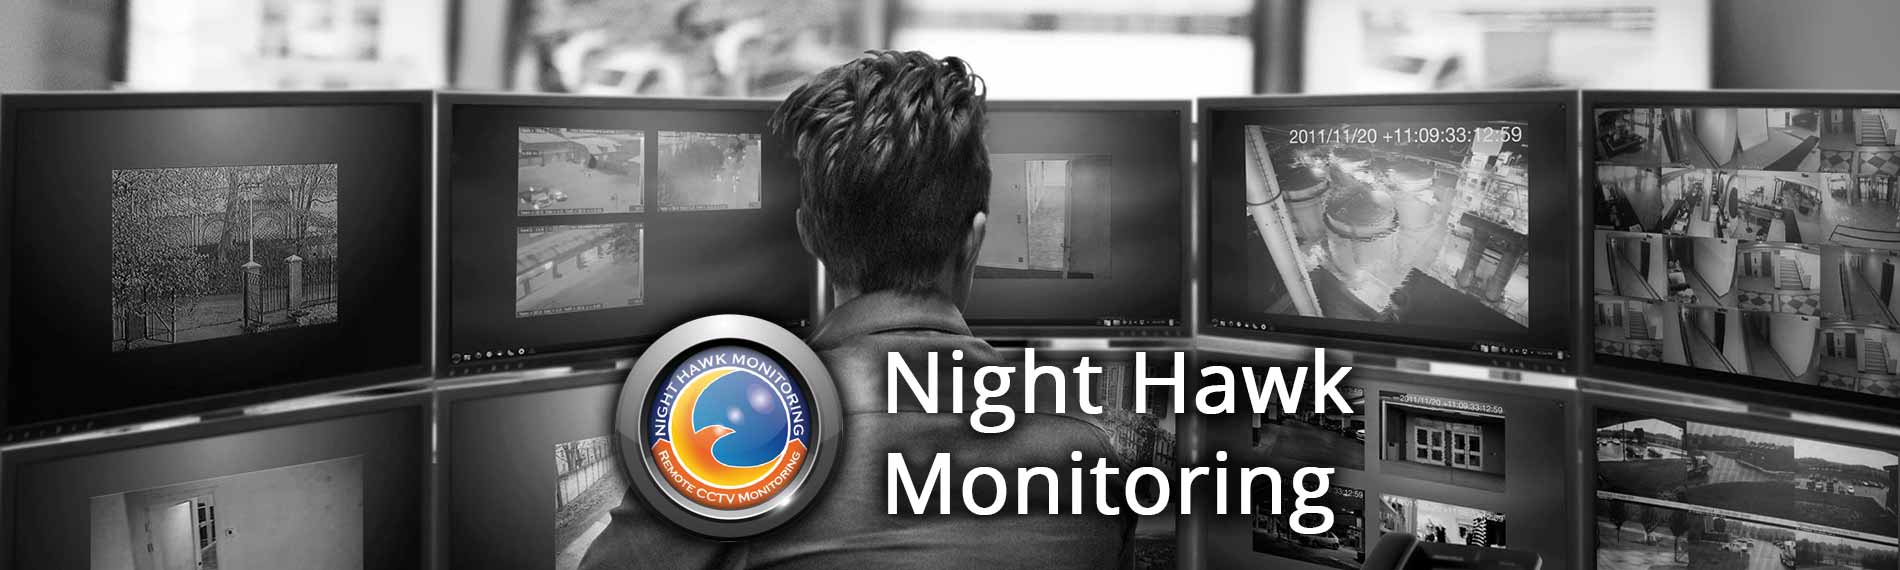 Remote Video Surveillance St. George - Live Security Cameras Monitoring St. George Utah